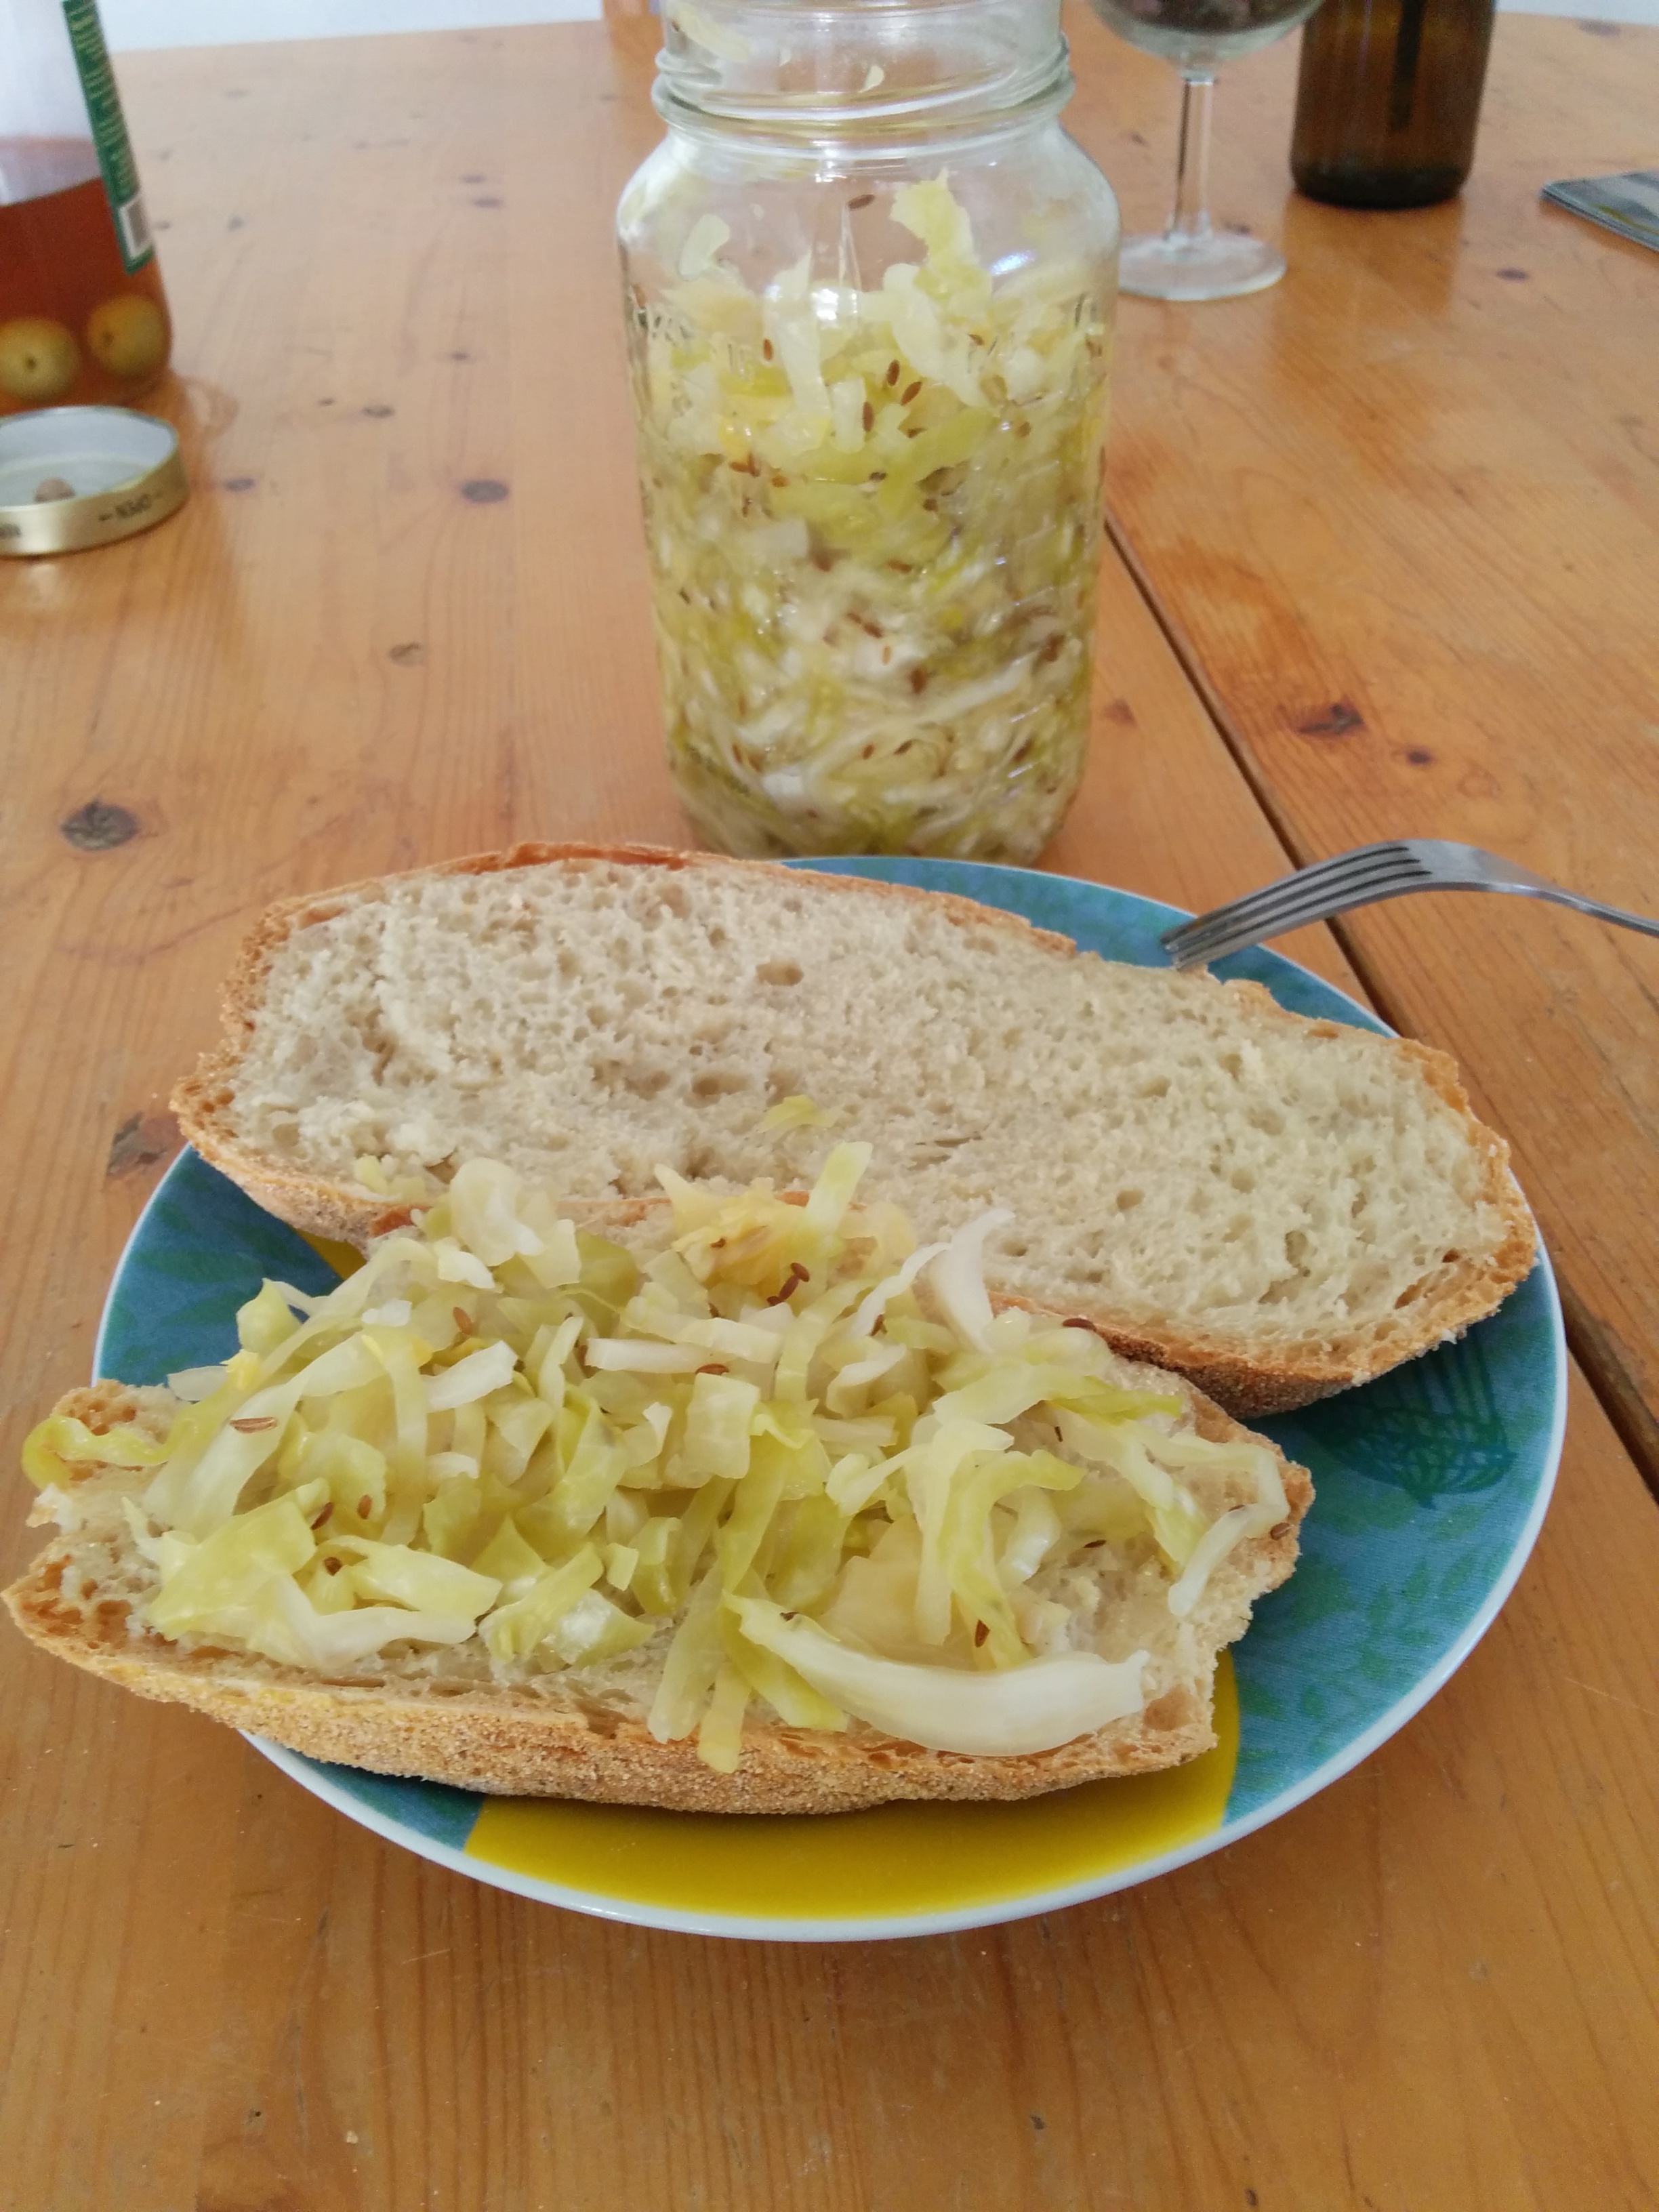 Jar of sauerkraut & some bread too.